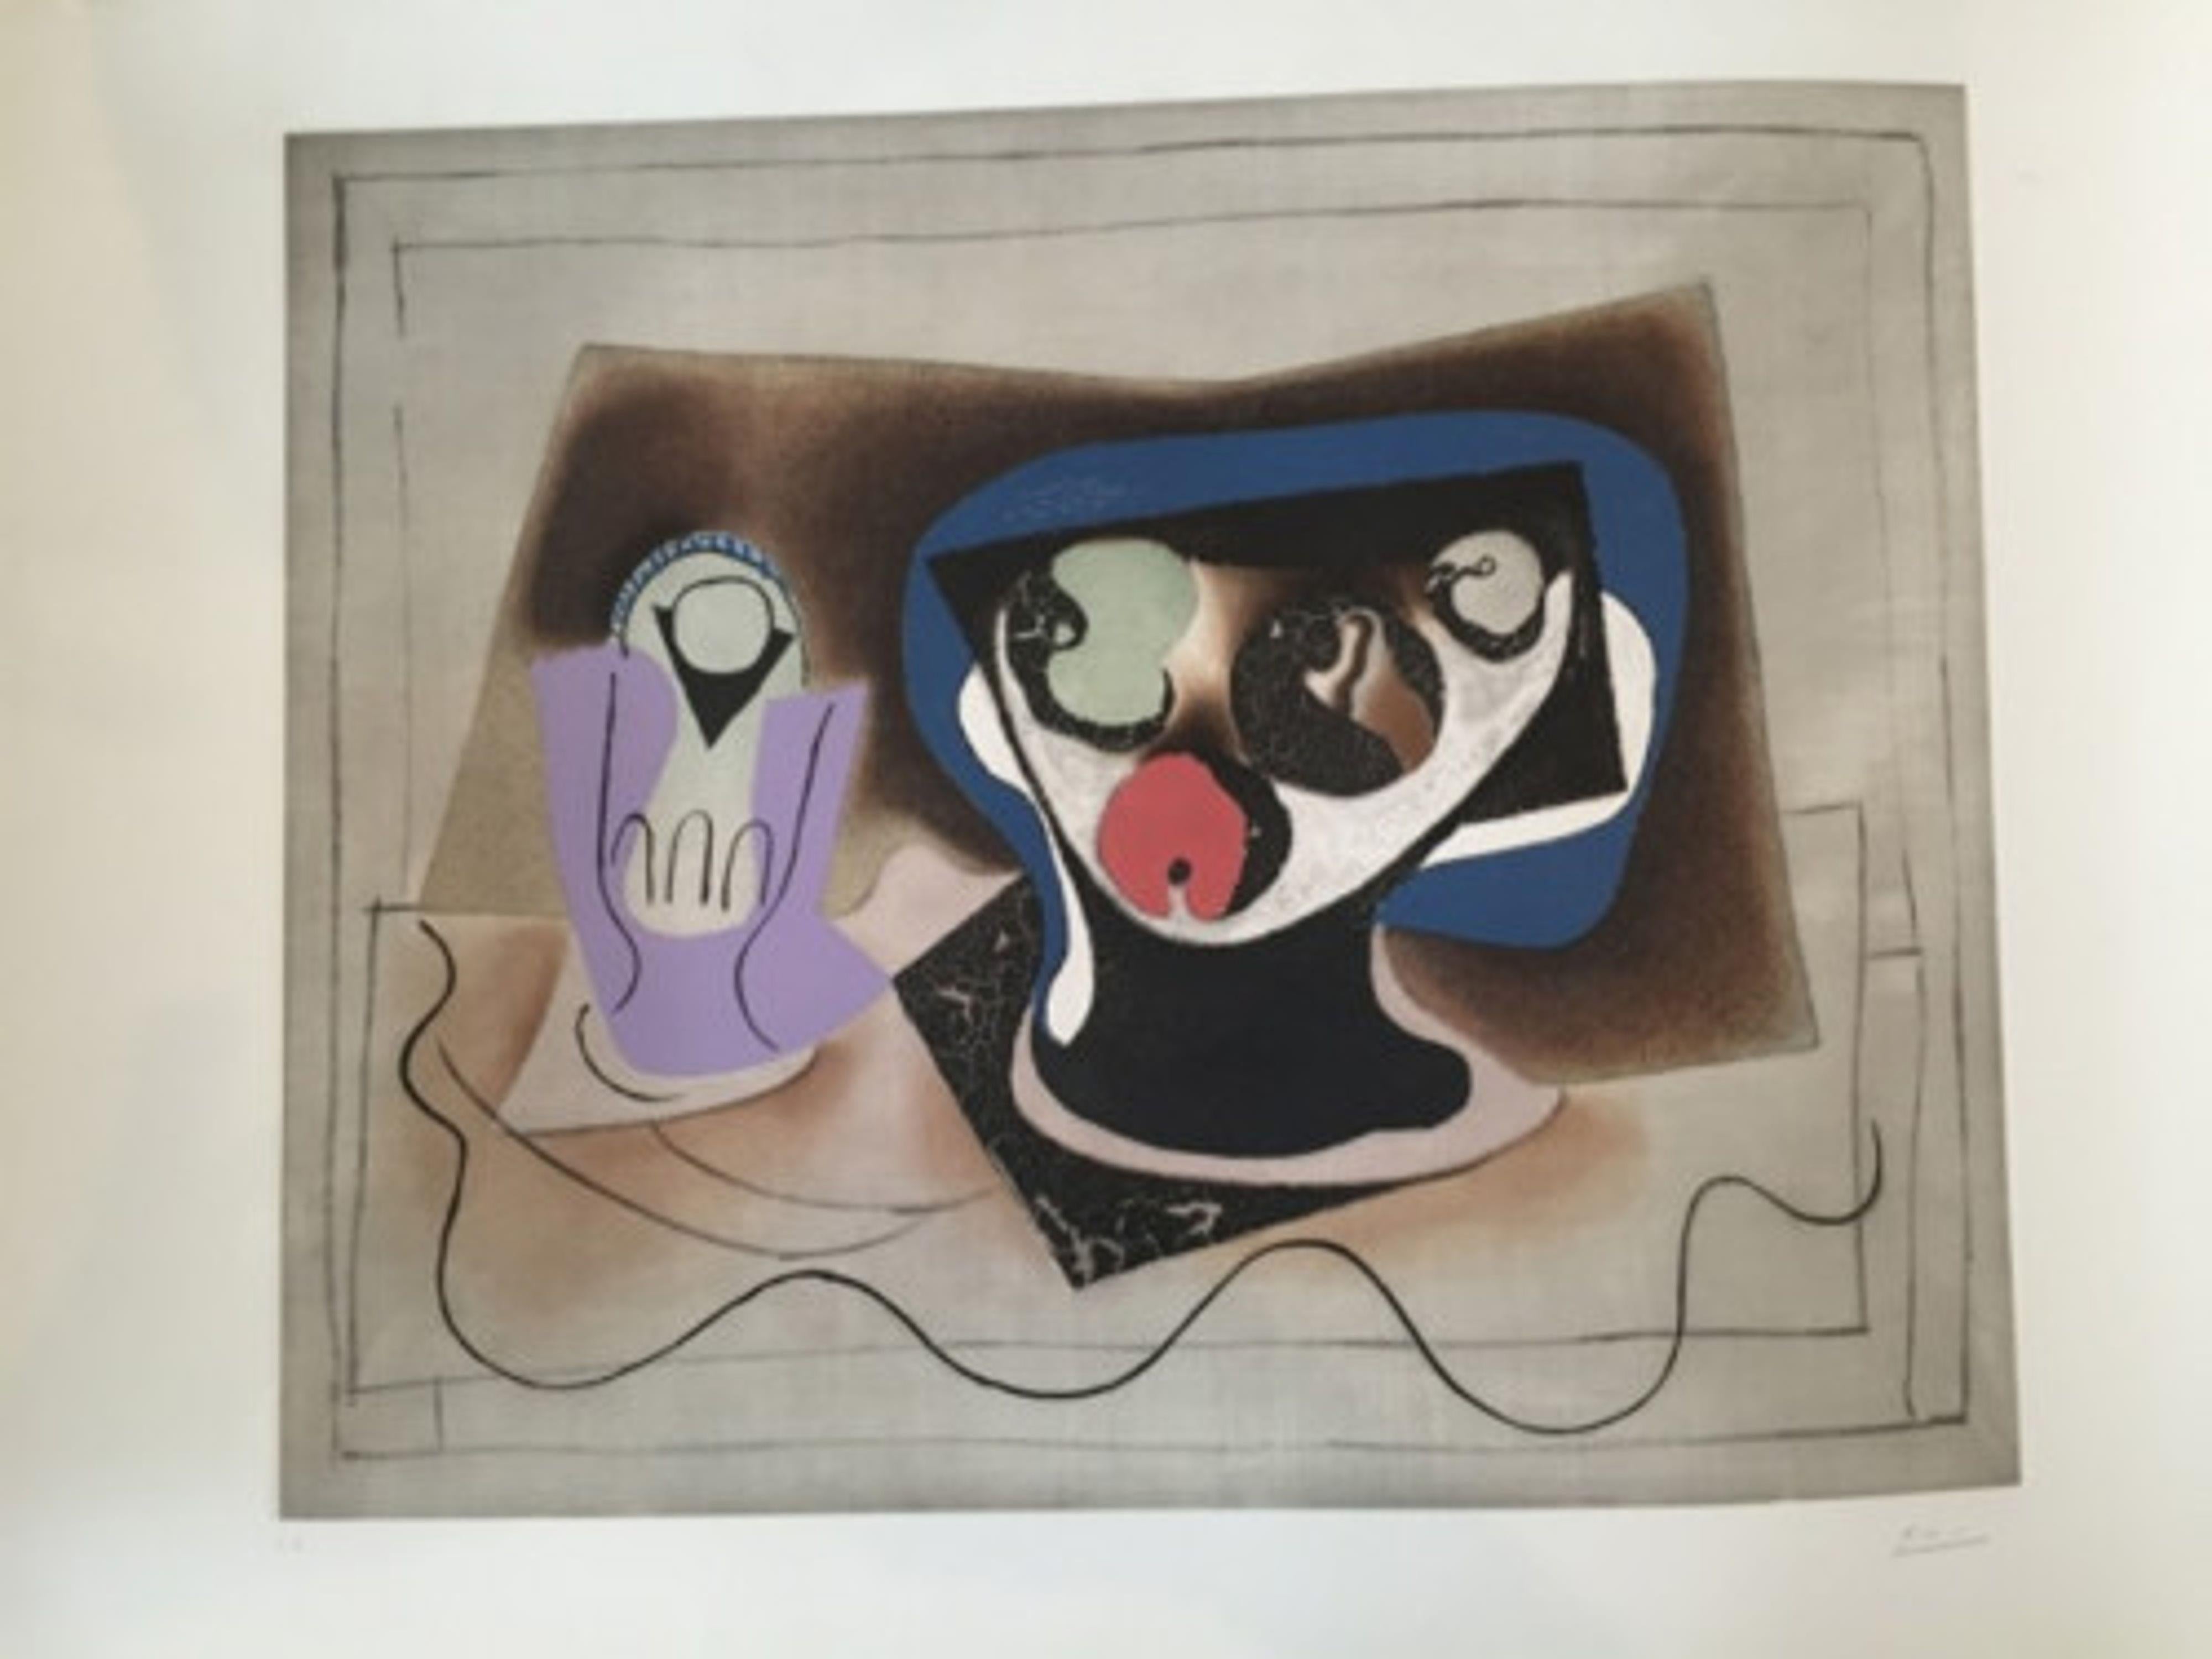 Le verre d' Absinthe - Contemporary Print by Pablo Picasso